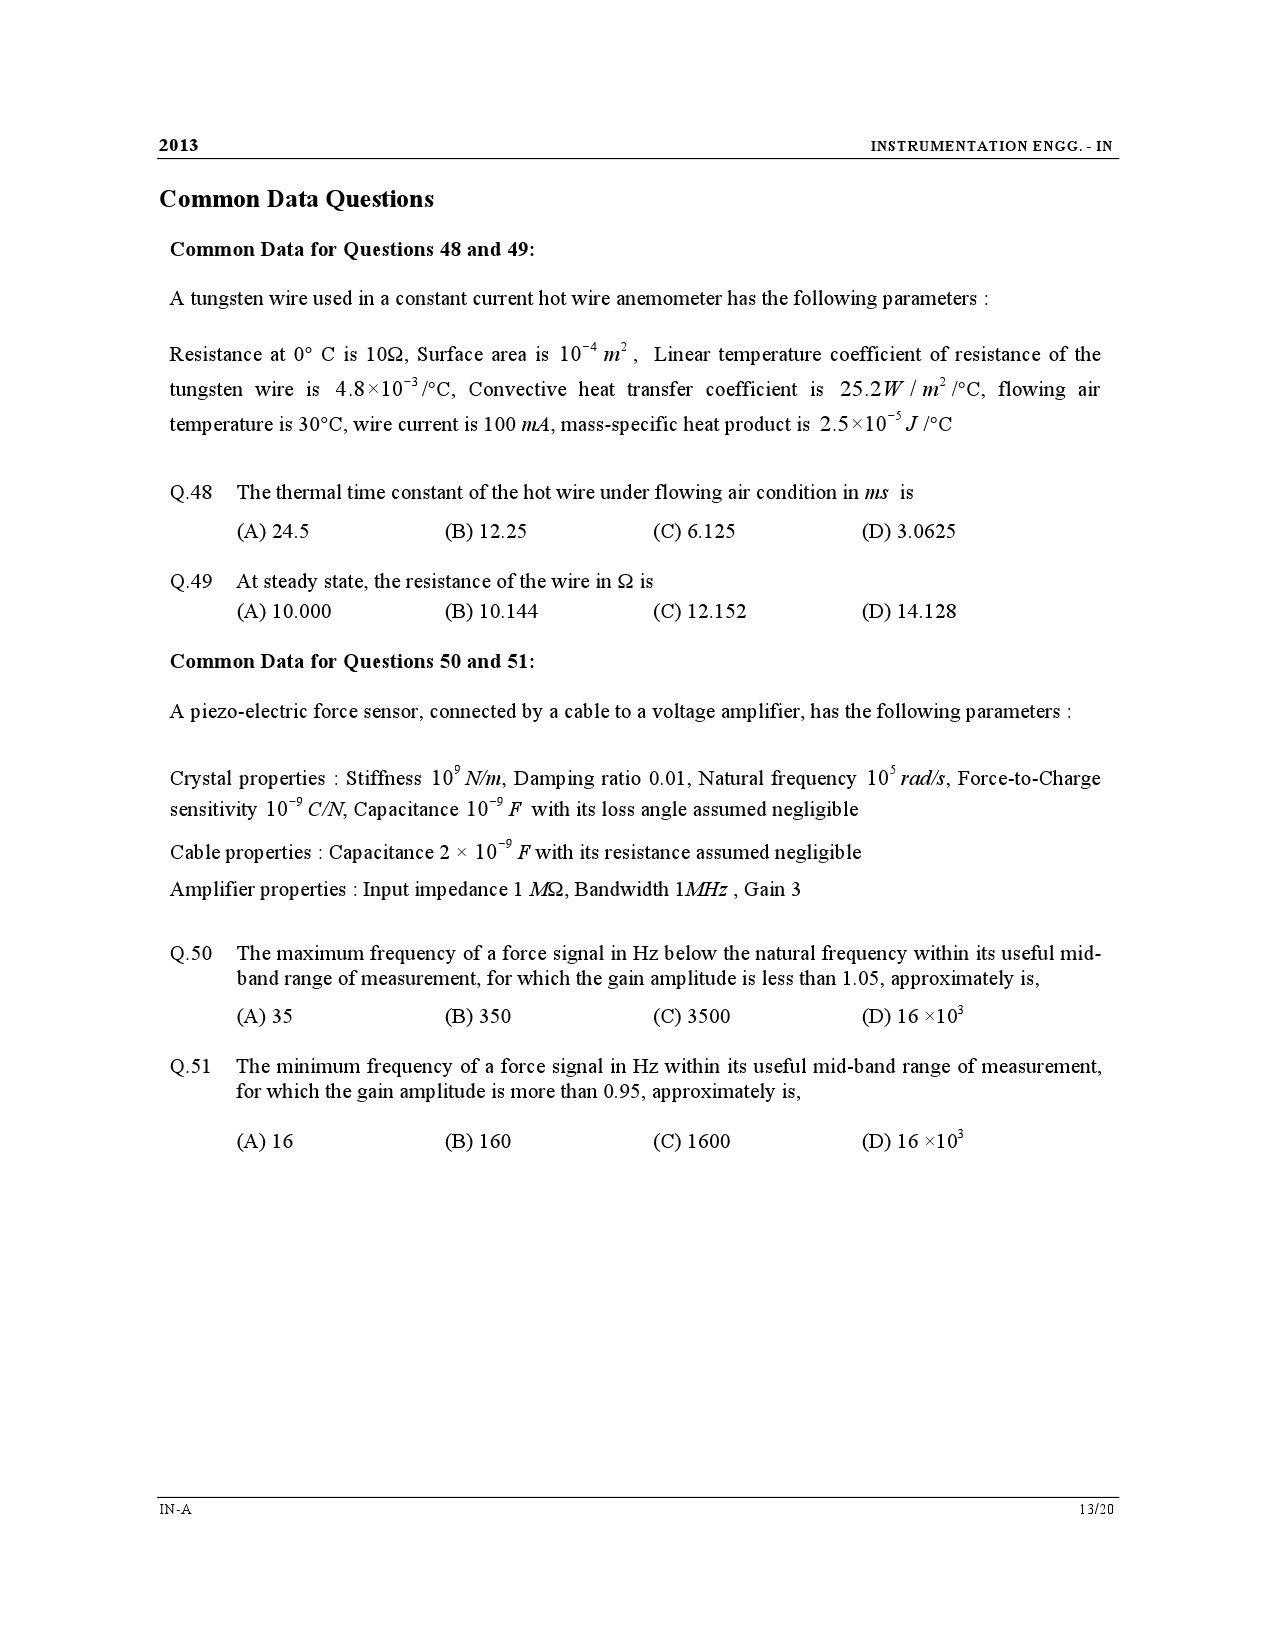 GATE Exam Question Paper 2013 Instrumentation Engineering 13